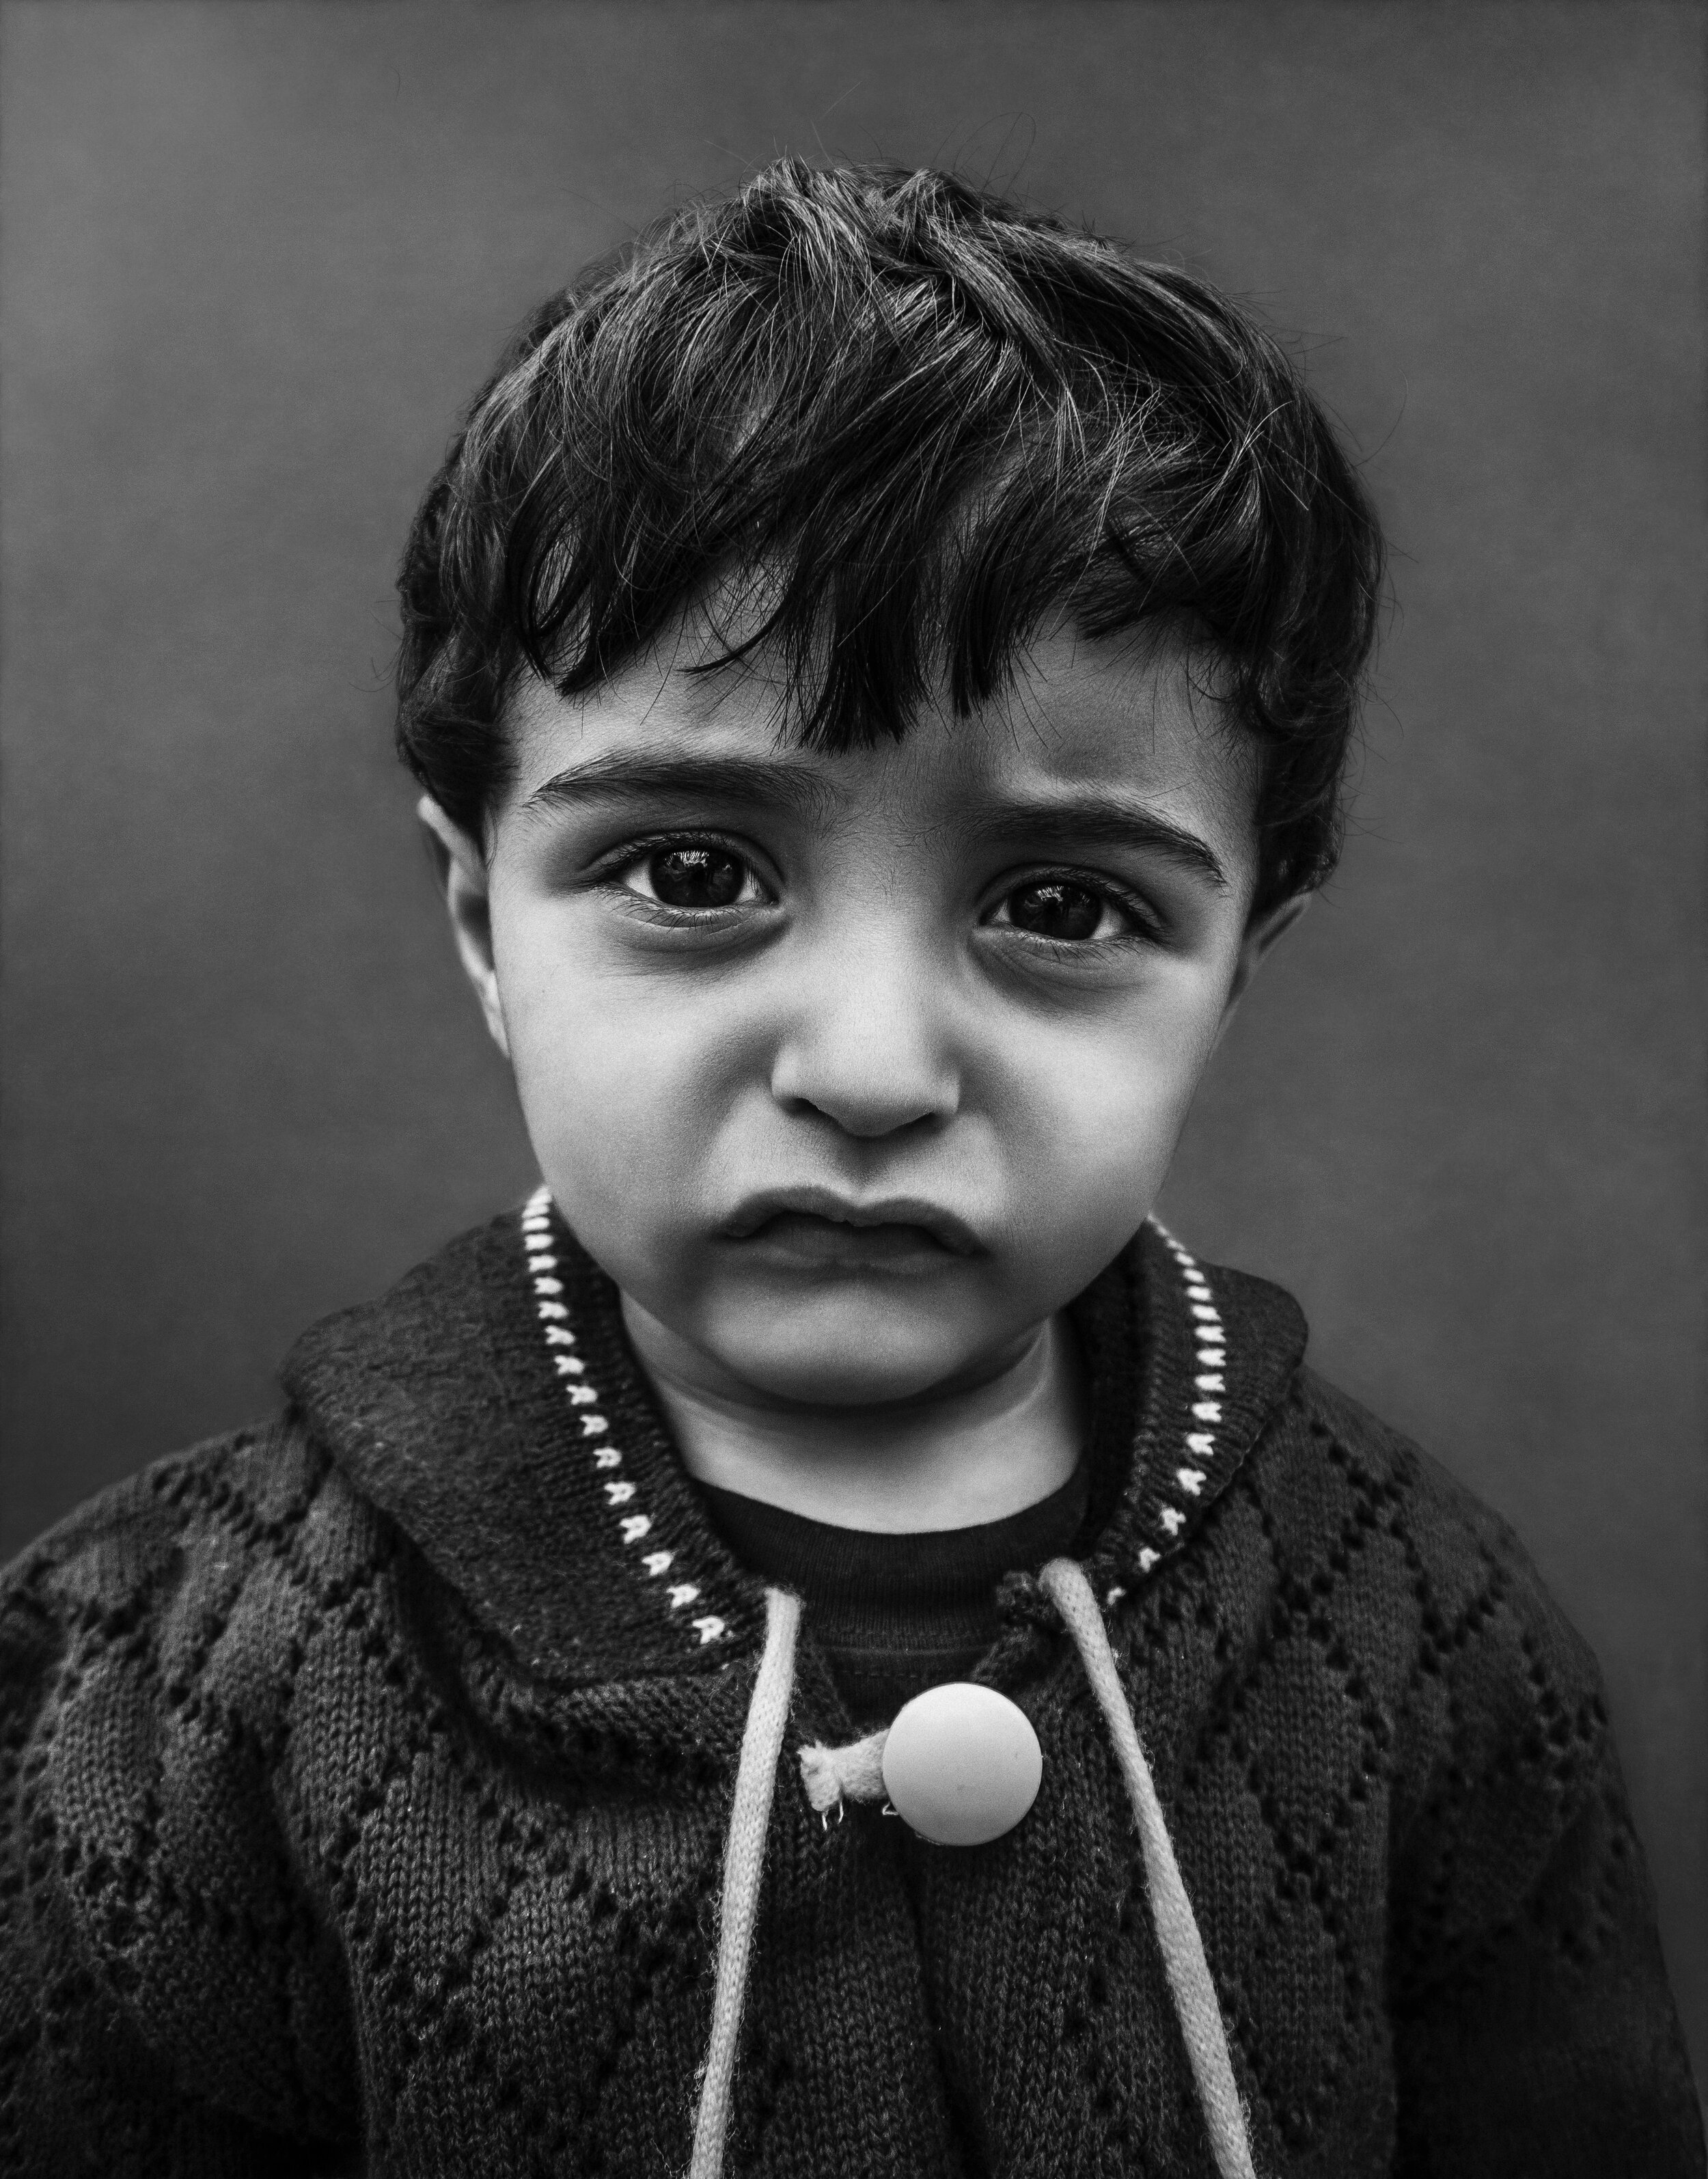 Lene Marie Fossen - Refugee Children Chios XVI 9221550 2015 - Archival Pigment Print - Size 63,79 x 50 cm - Edition of 7 + 2 AP. Courtesy WILLAS contemporary  - Courtesy WILLAS contemporary